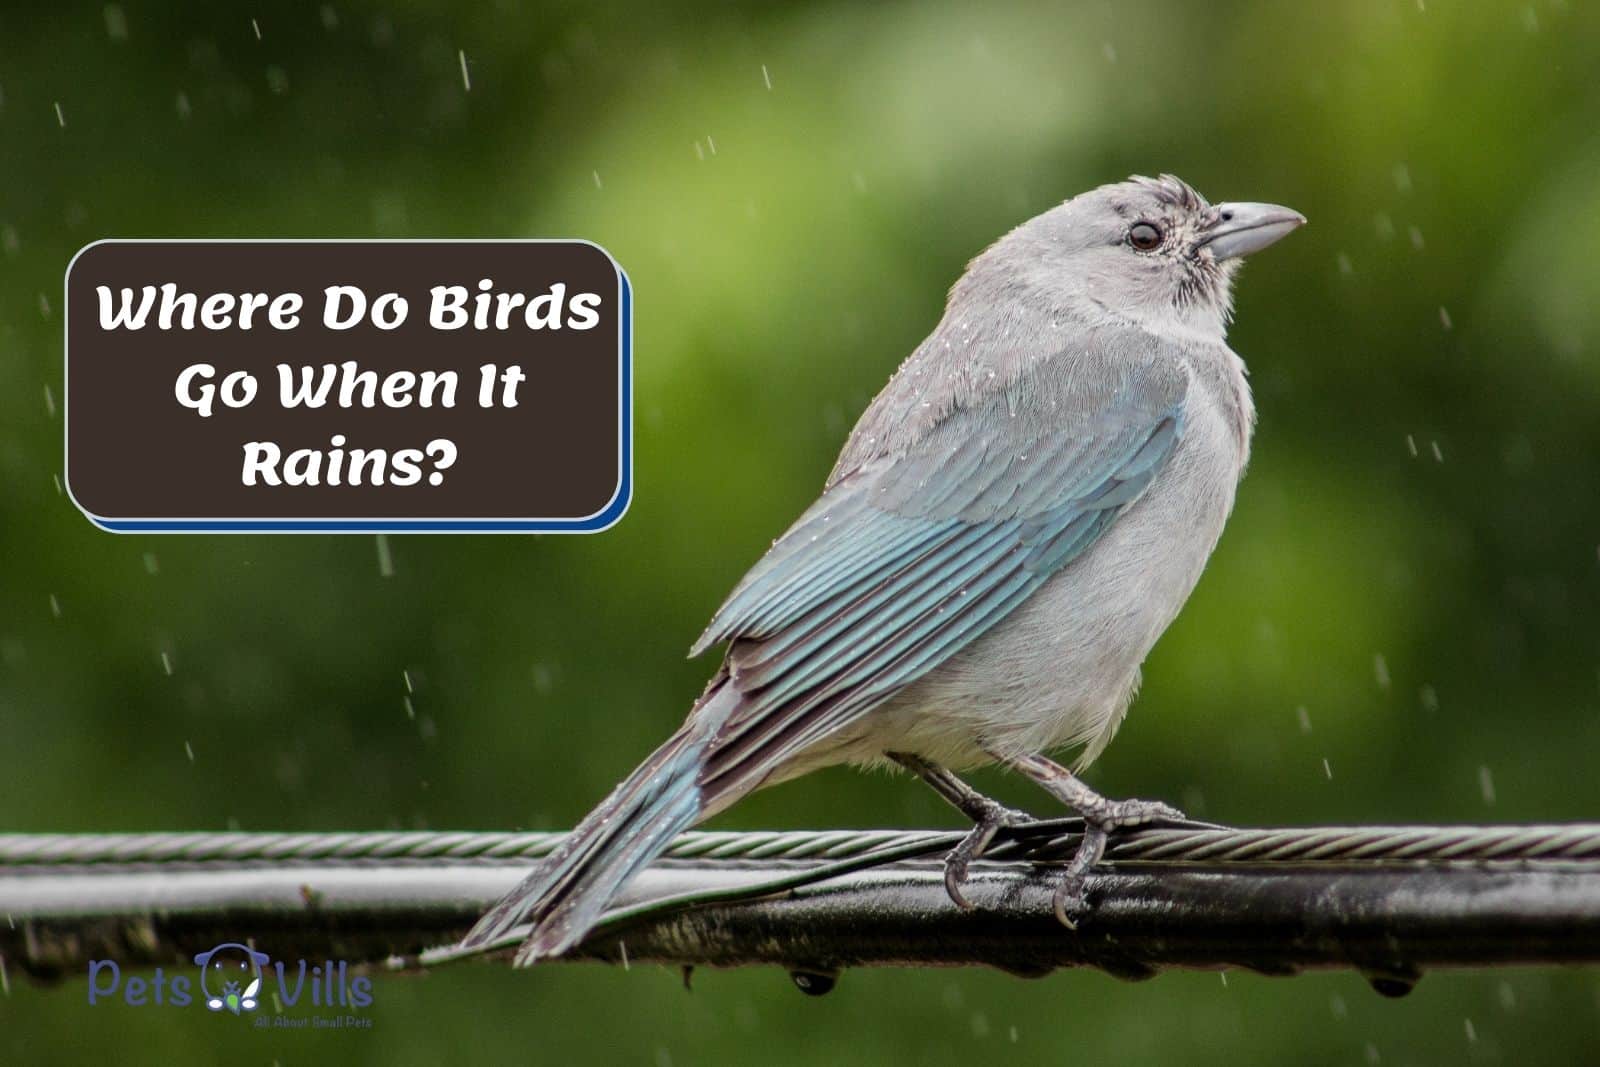 small bird in the rain so where do birds go when it rains?